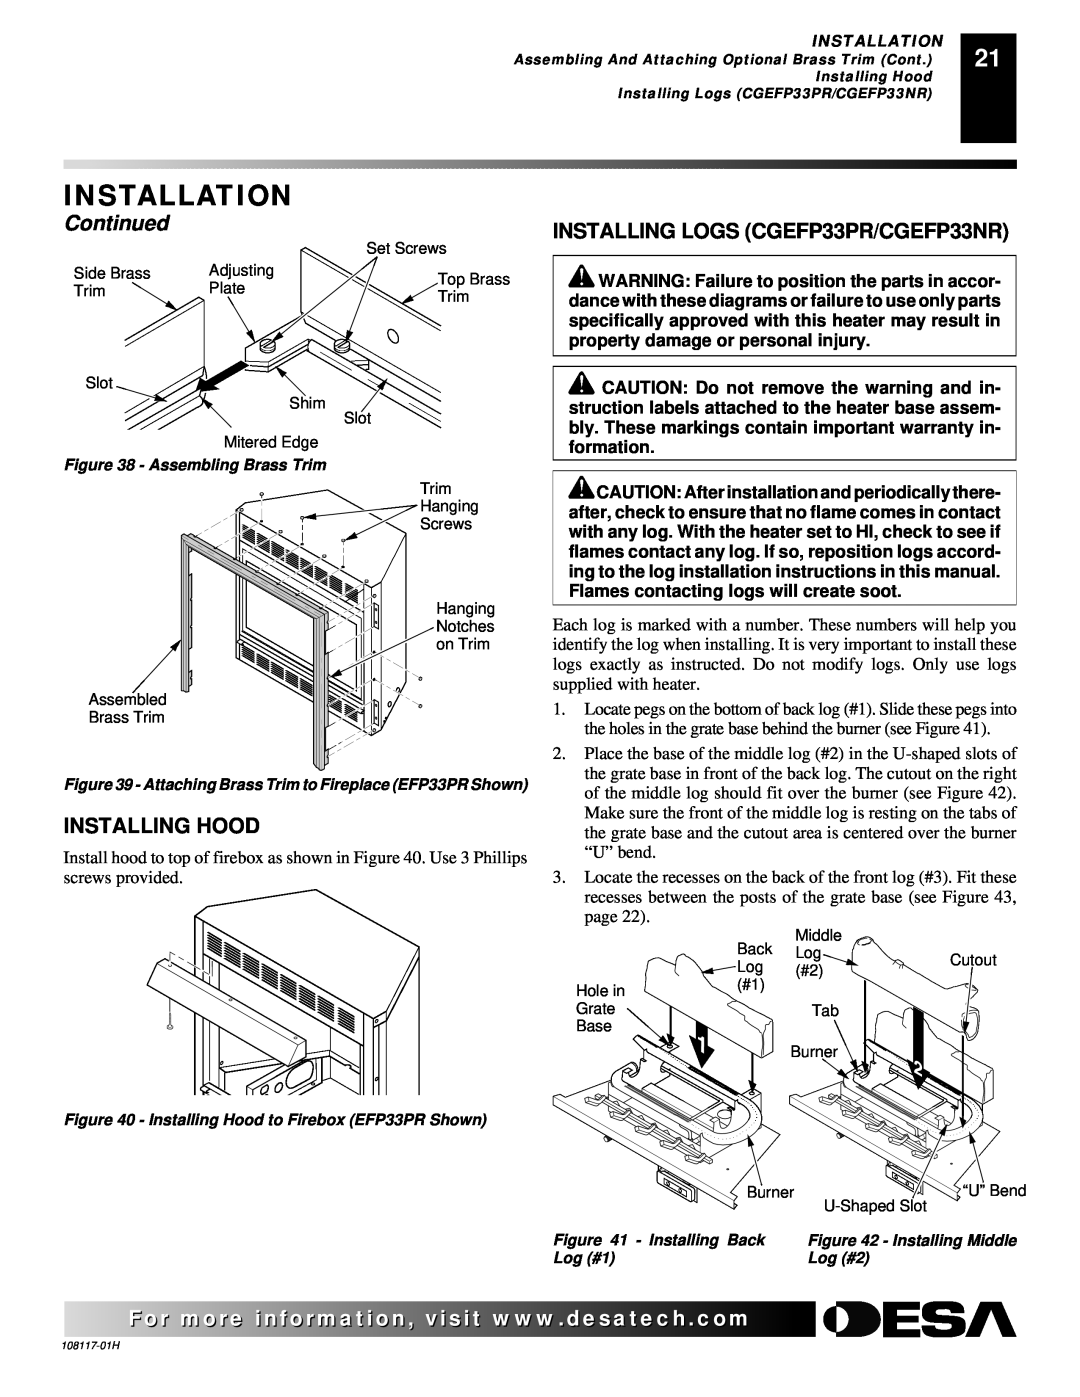 Desa installation manual INSTALLING LOGS CGEFP33PR/CGEFP33NR, Installing Hood, Installation, Continued 